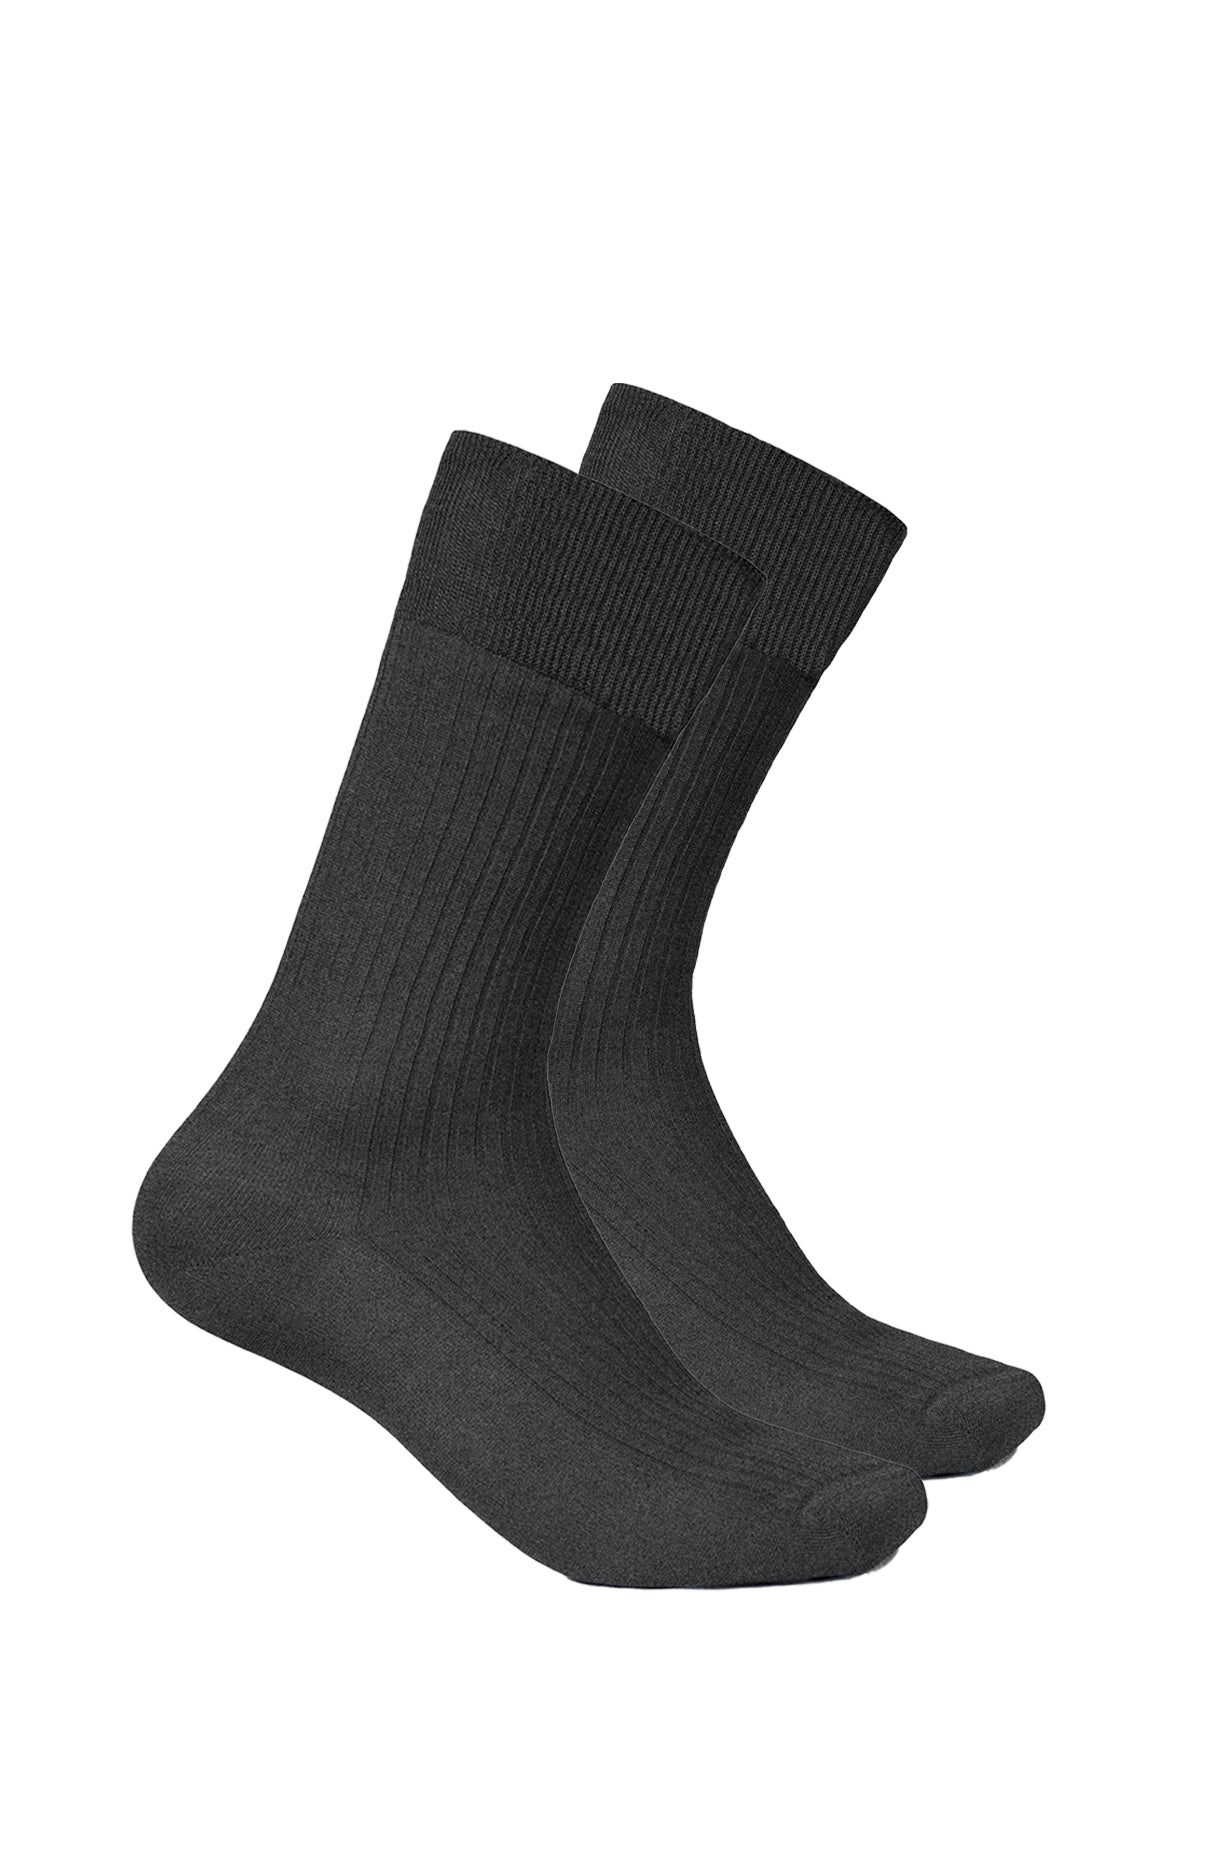 Anthracite Pack of 2 socks - Scottish thread